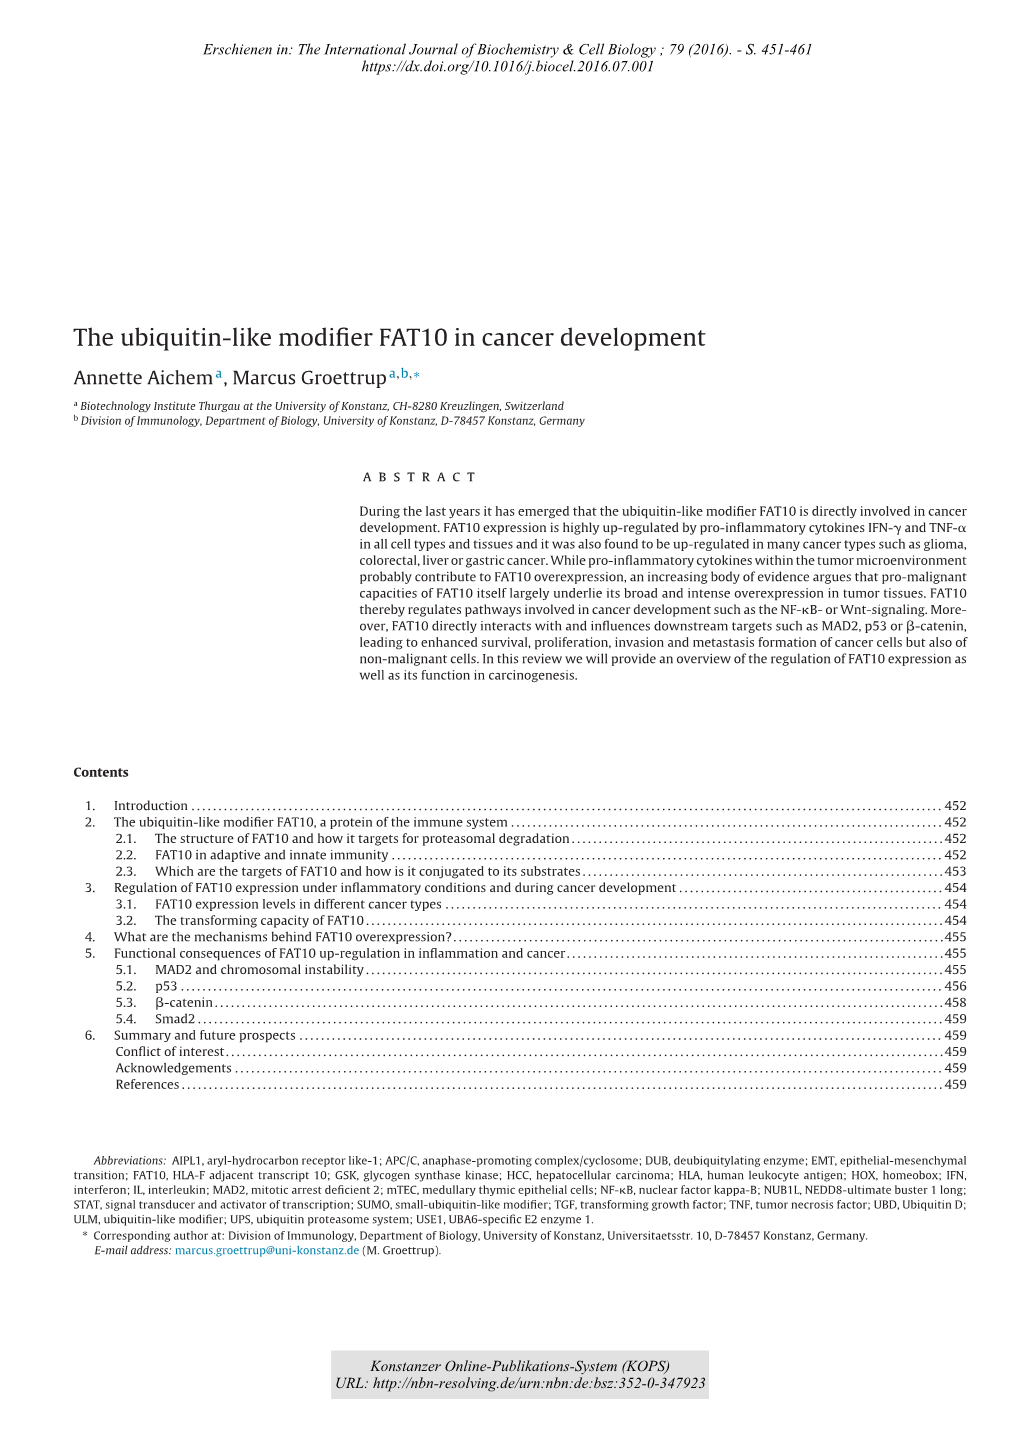 The Ubiquitin-Like Modifier FAT10 in Cancer Development